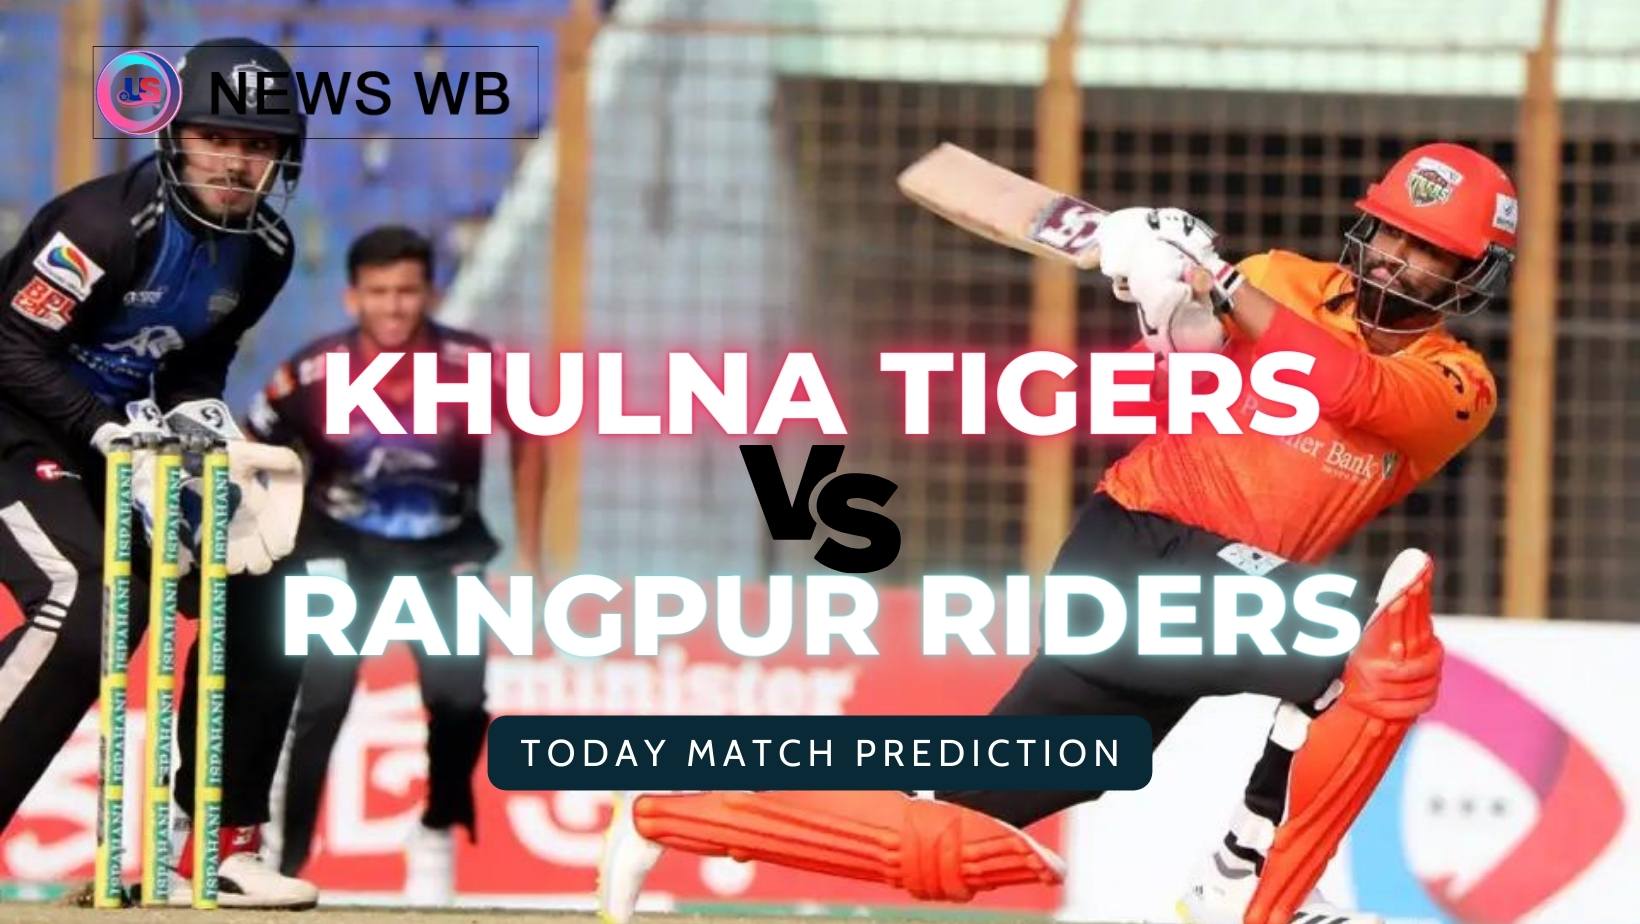 Today Match Prediction: KLT vs RGR Dream11 Team, Khulna Tigers vs Rangpur Riders 9th Match, Who Will Win?